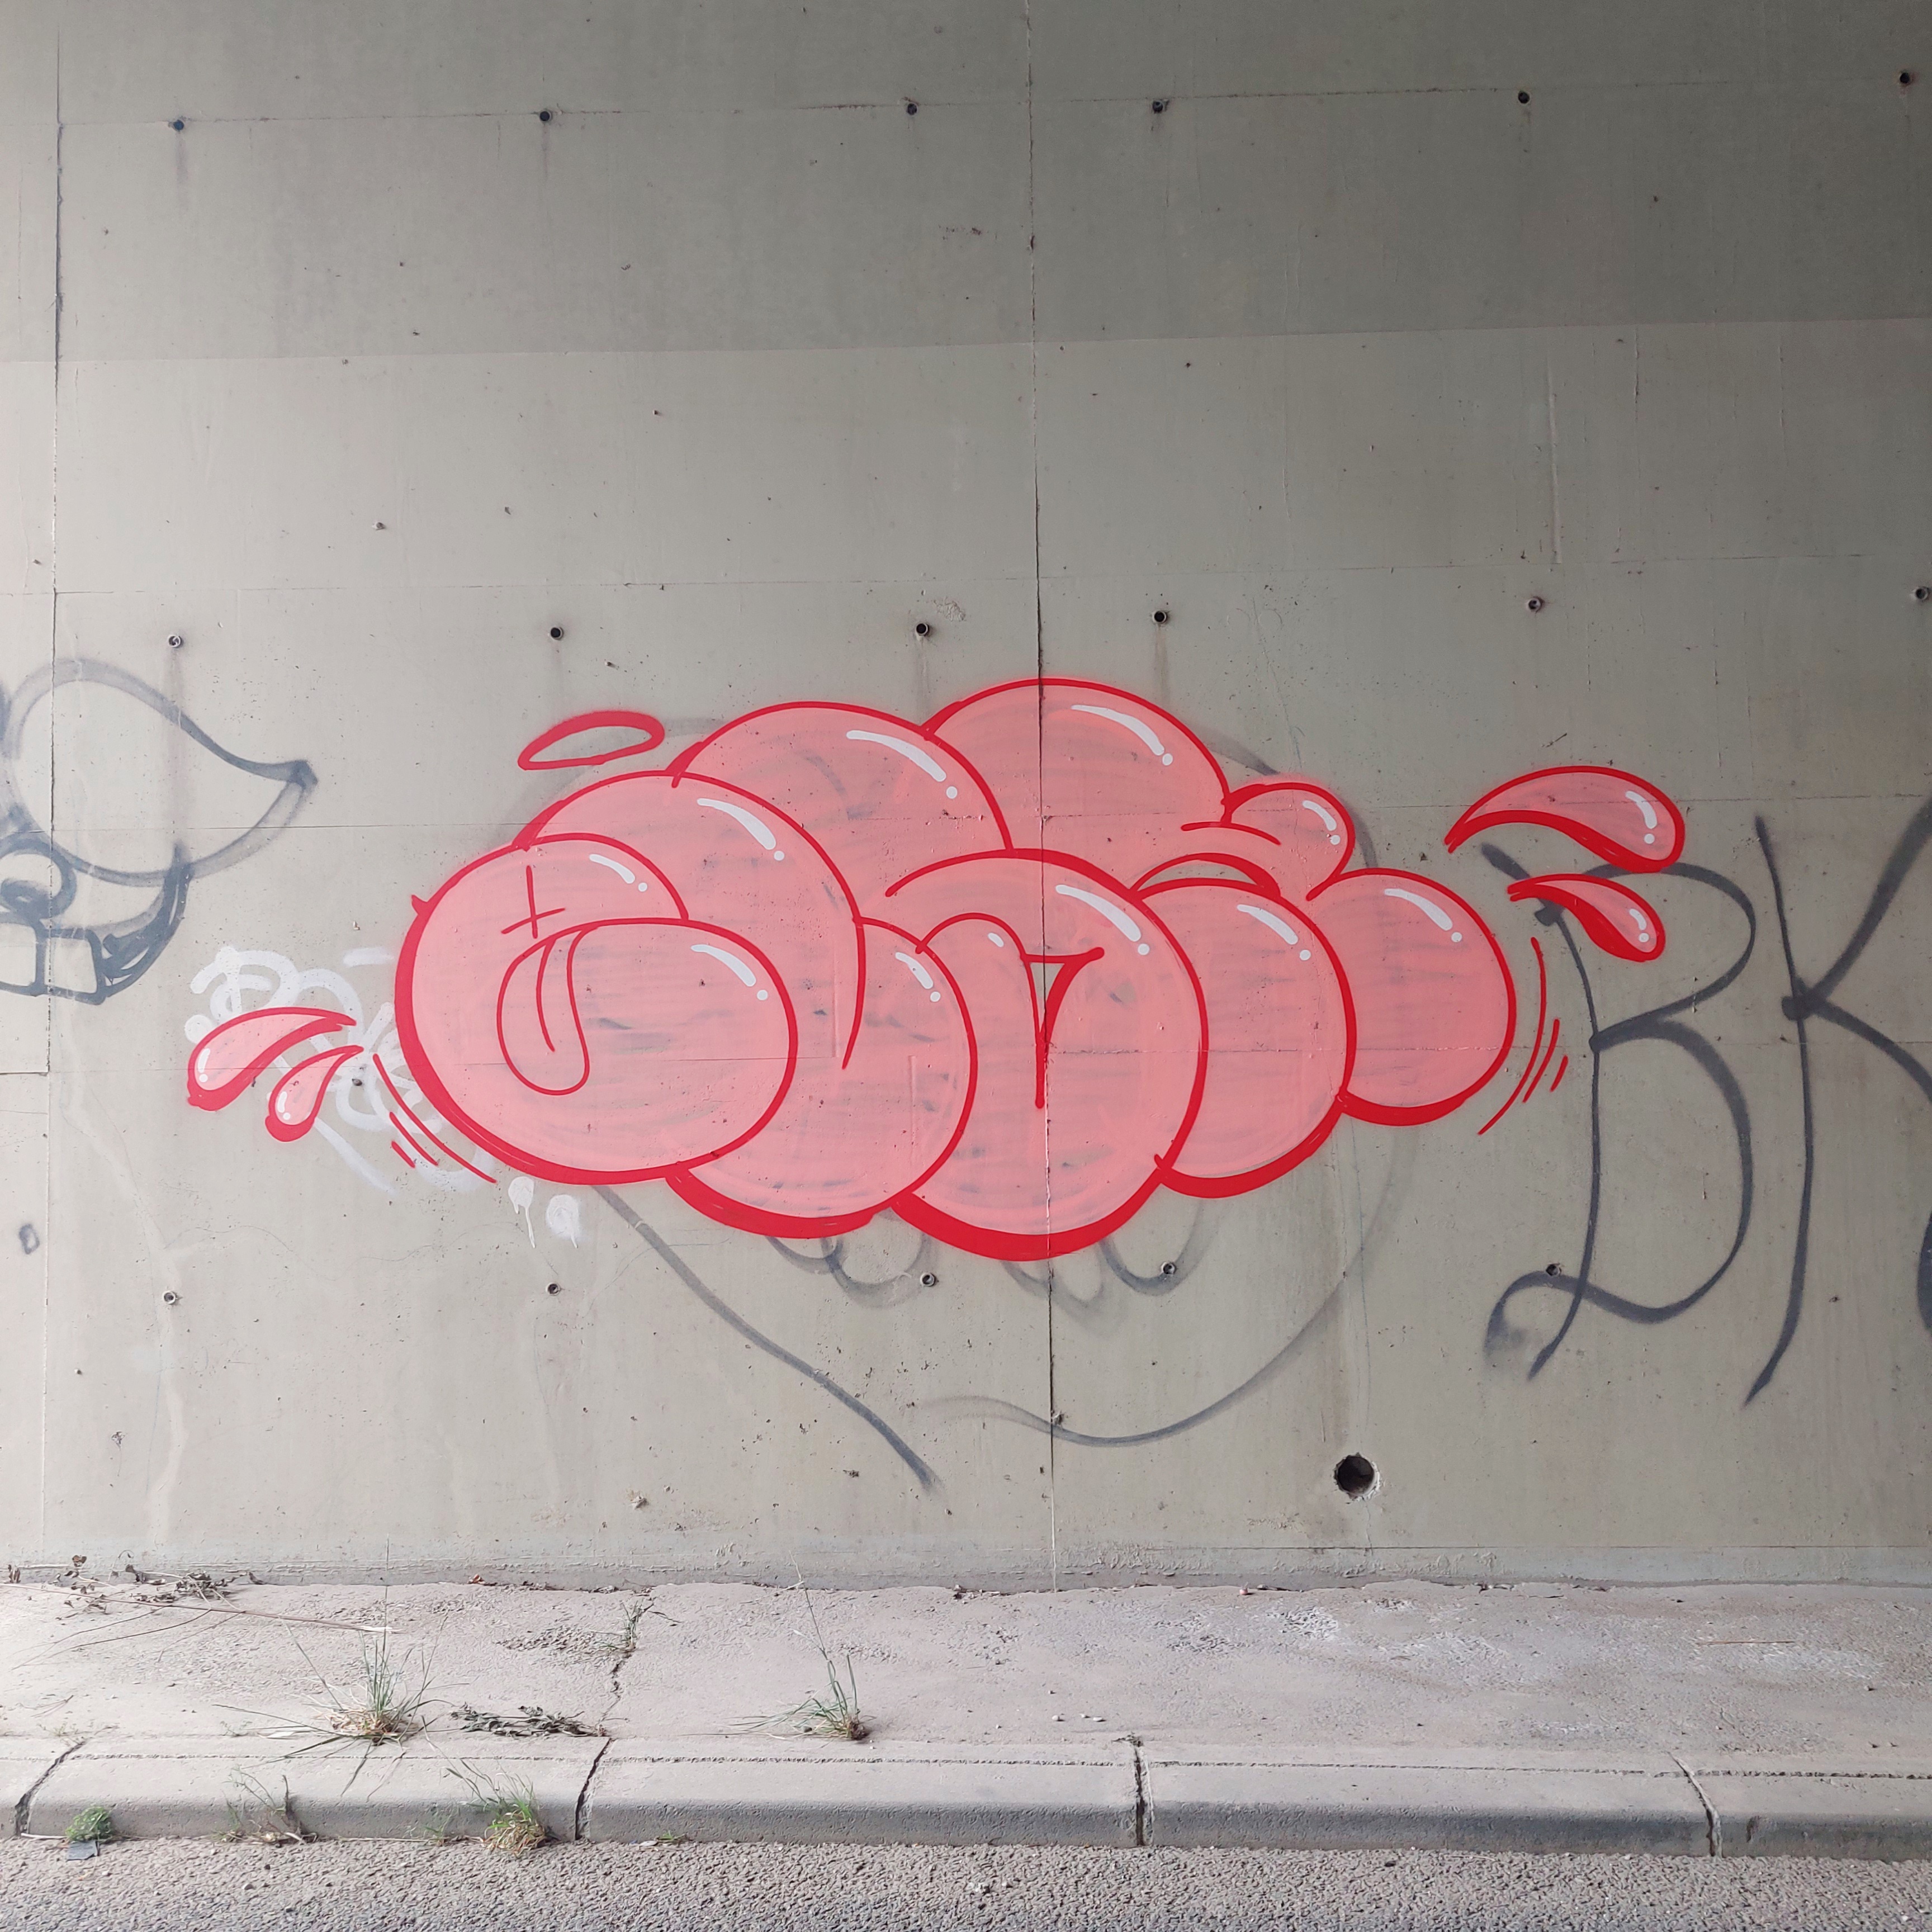 Bush x Bushup - Street Art - Graffiti - Painter